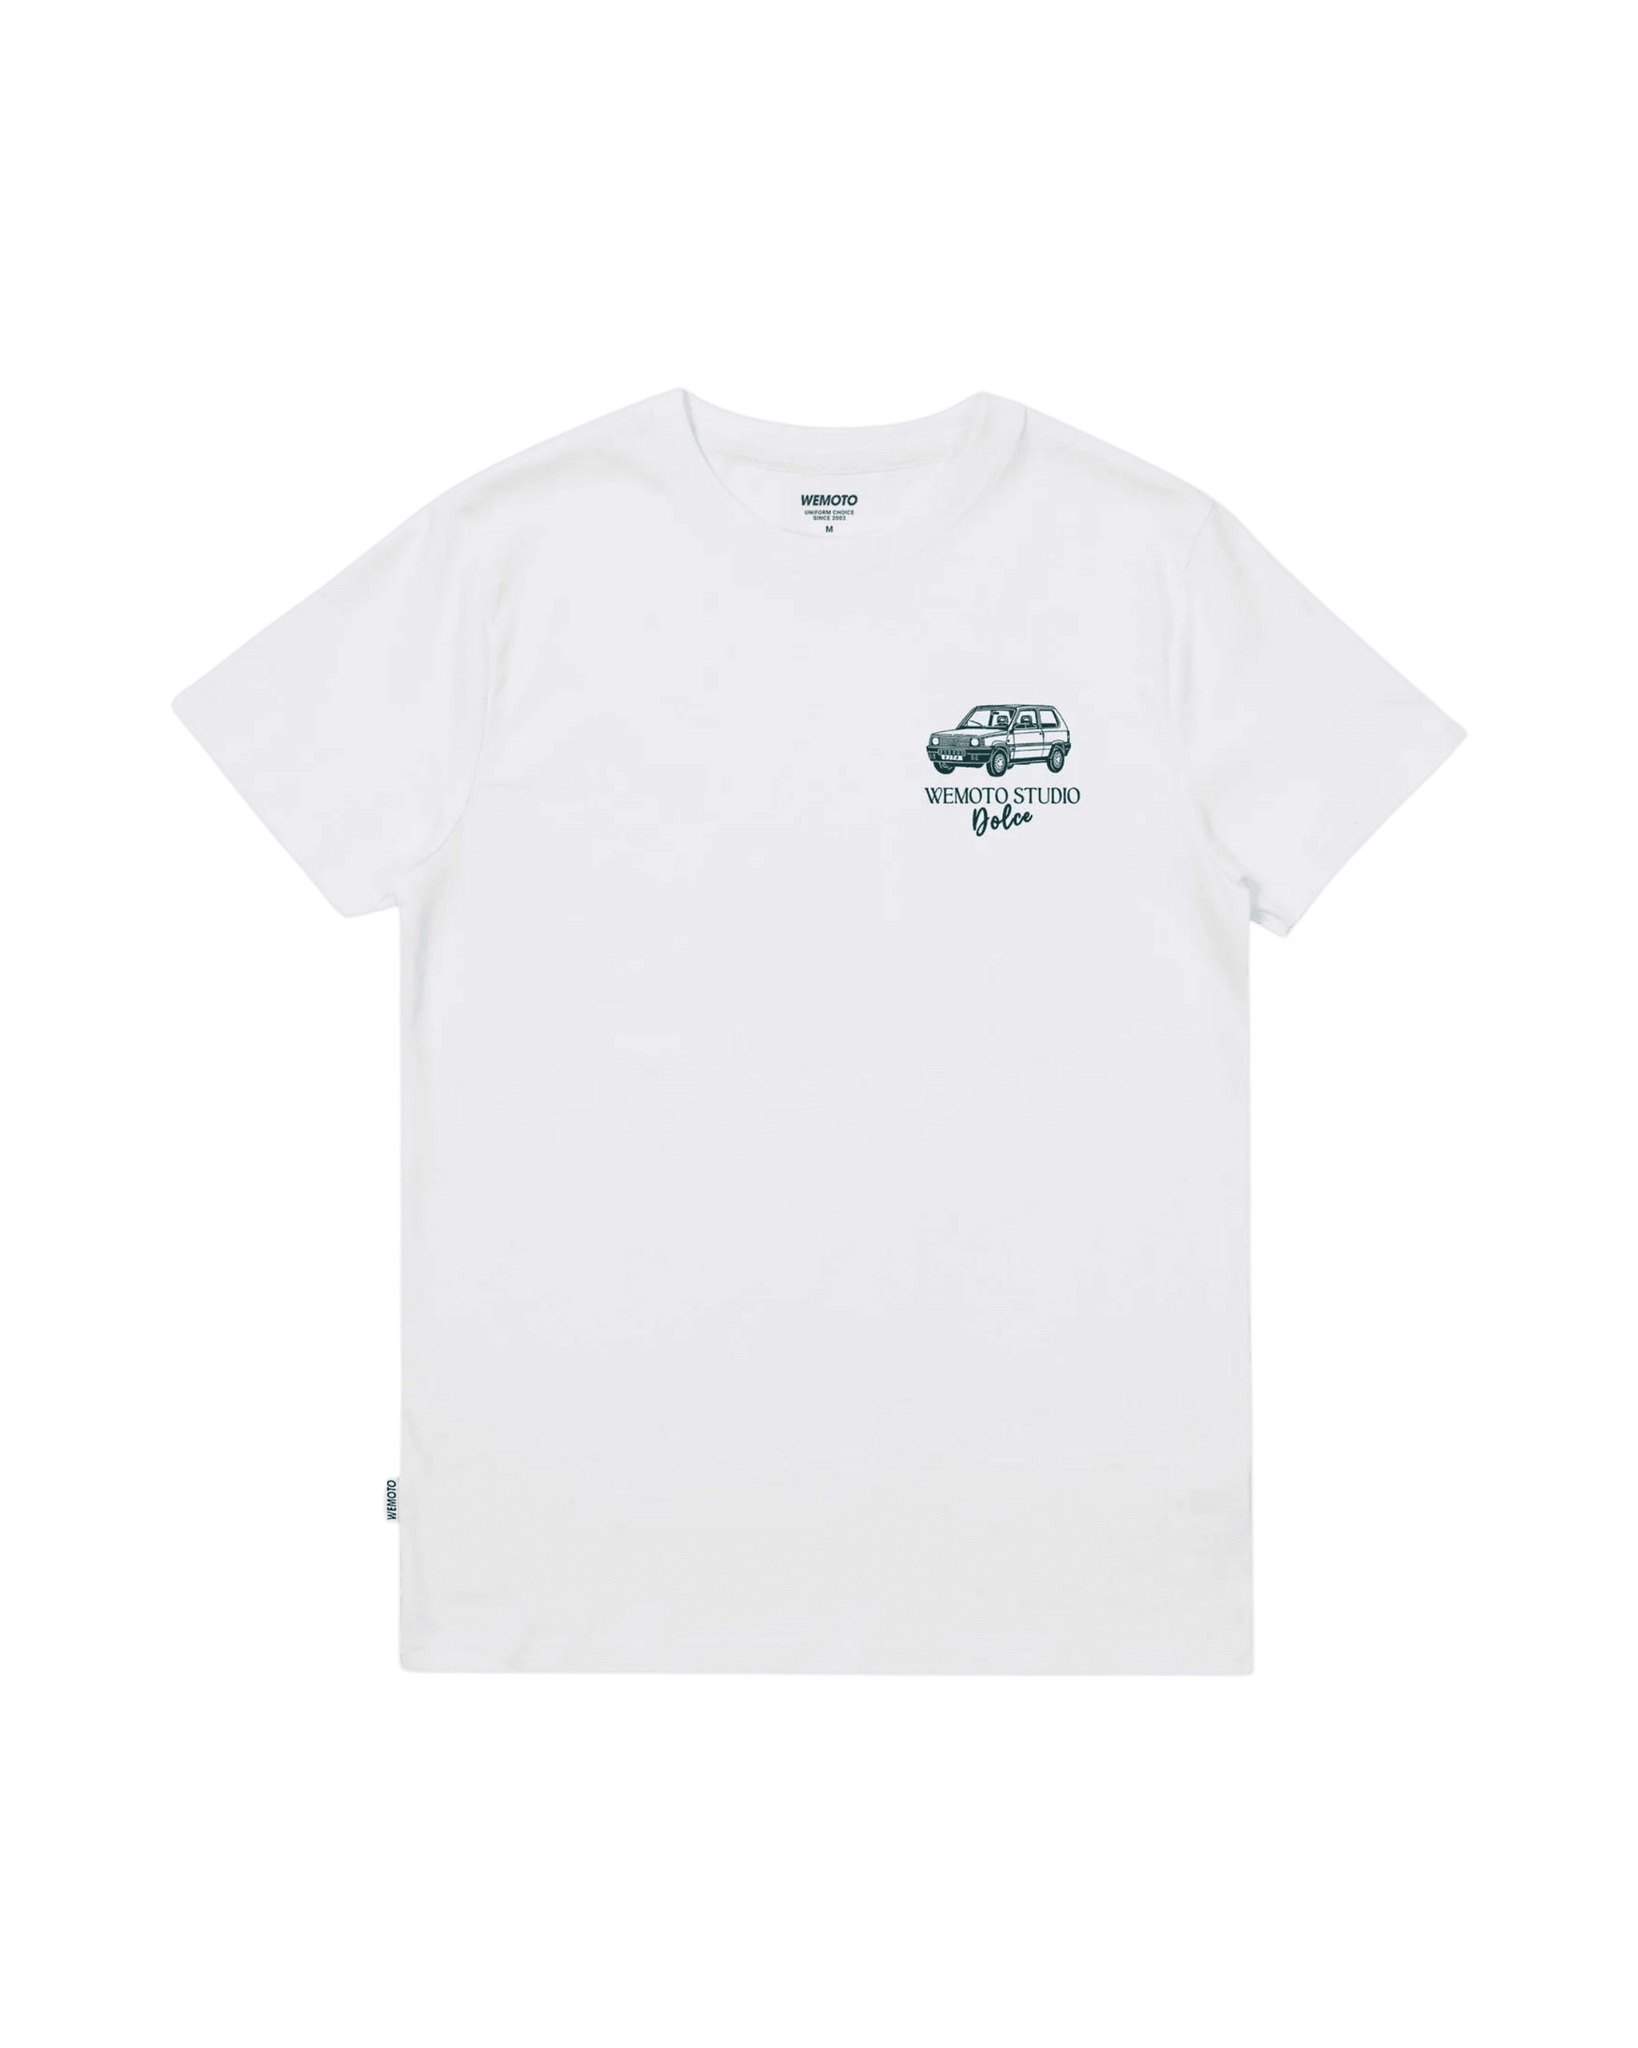 Camiseta WEMOTO Market White - ECRU